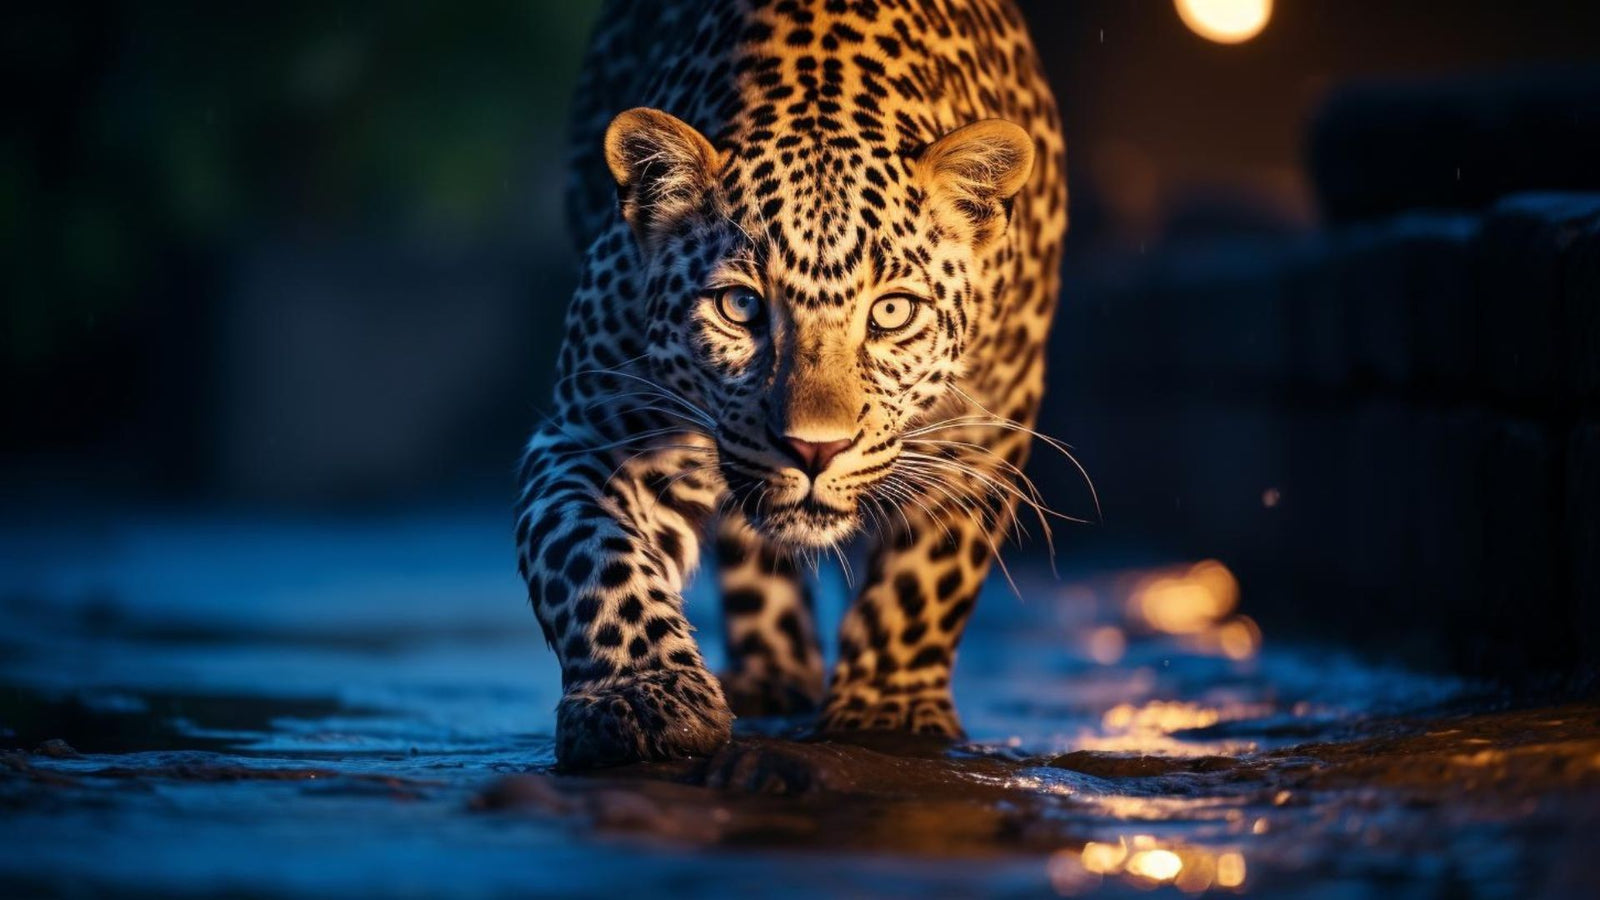 Loving like a leopard